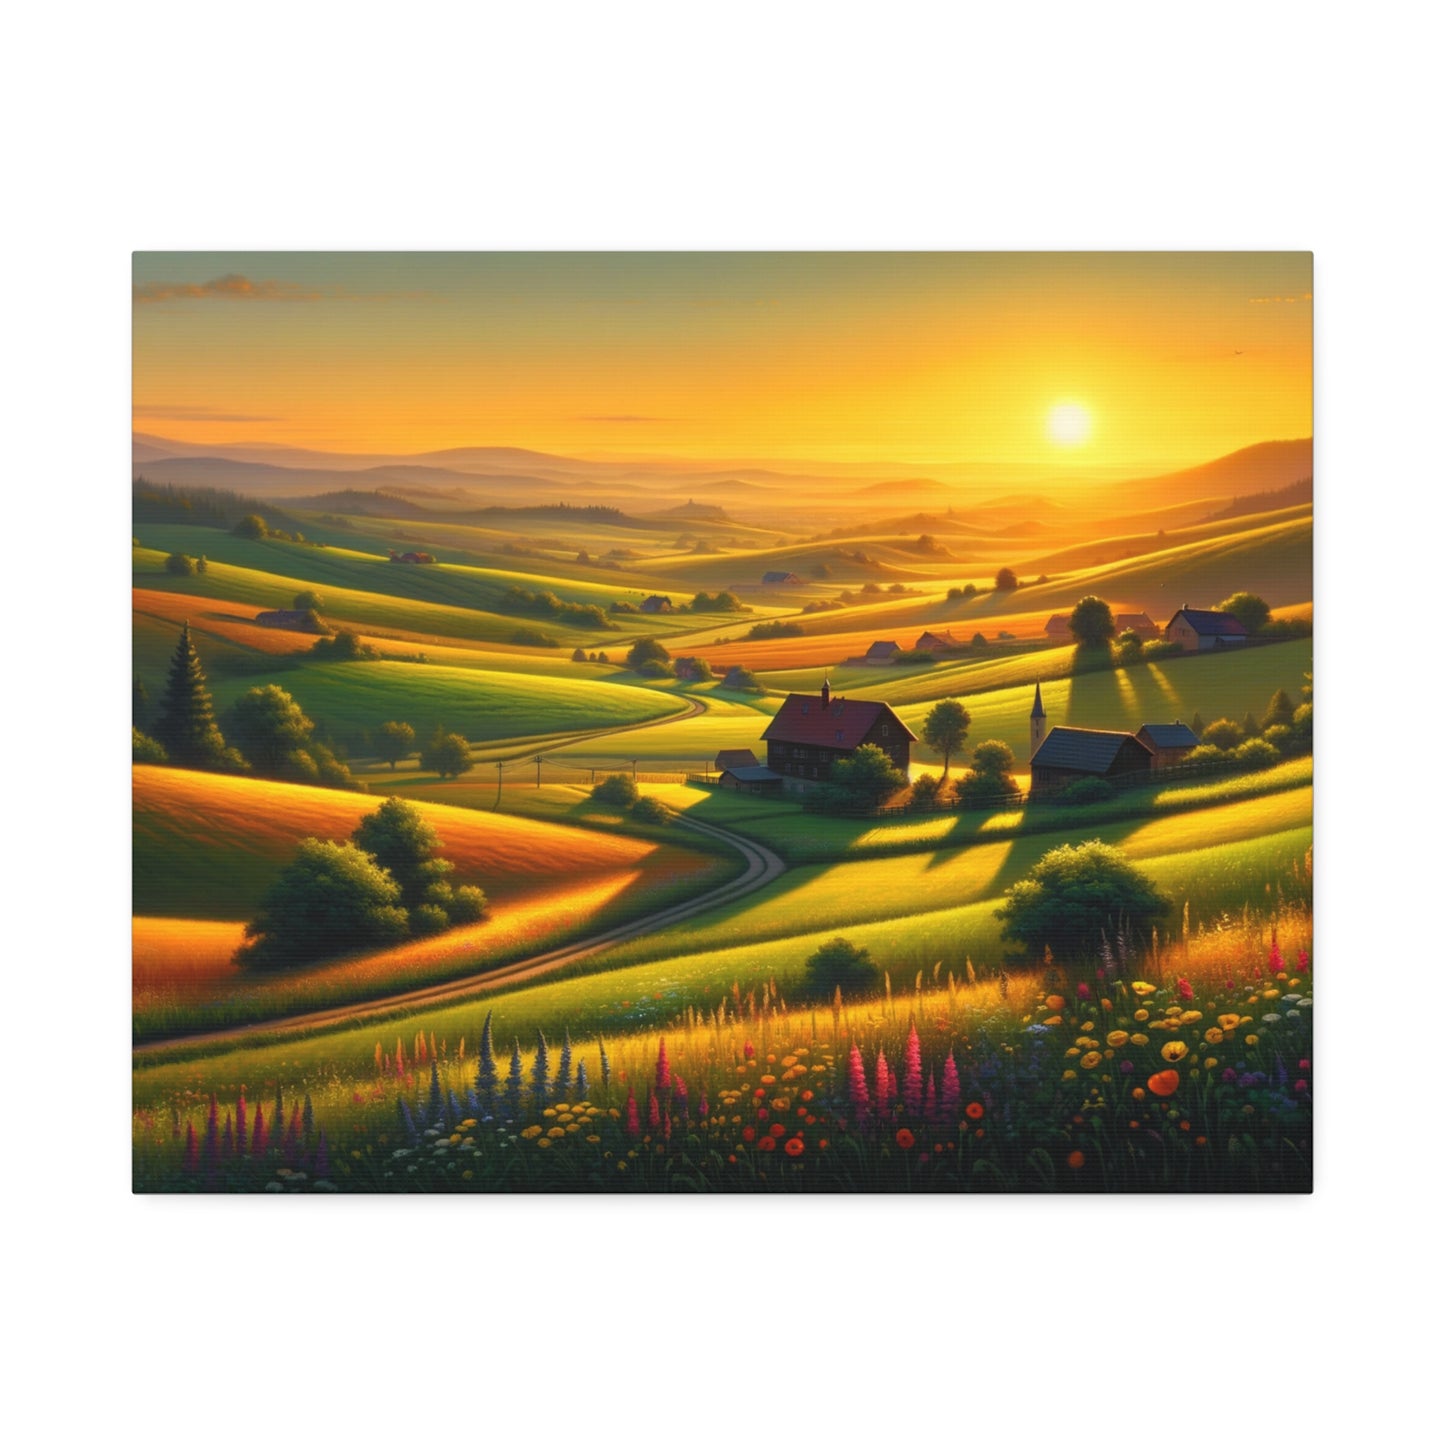 Sunset Serenade: Idyllic Countryside at Dusk Canvas Art